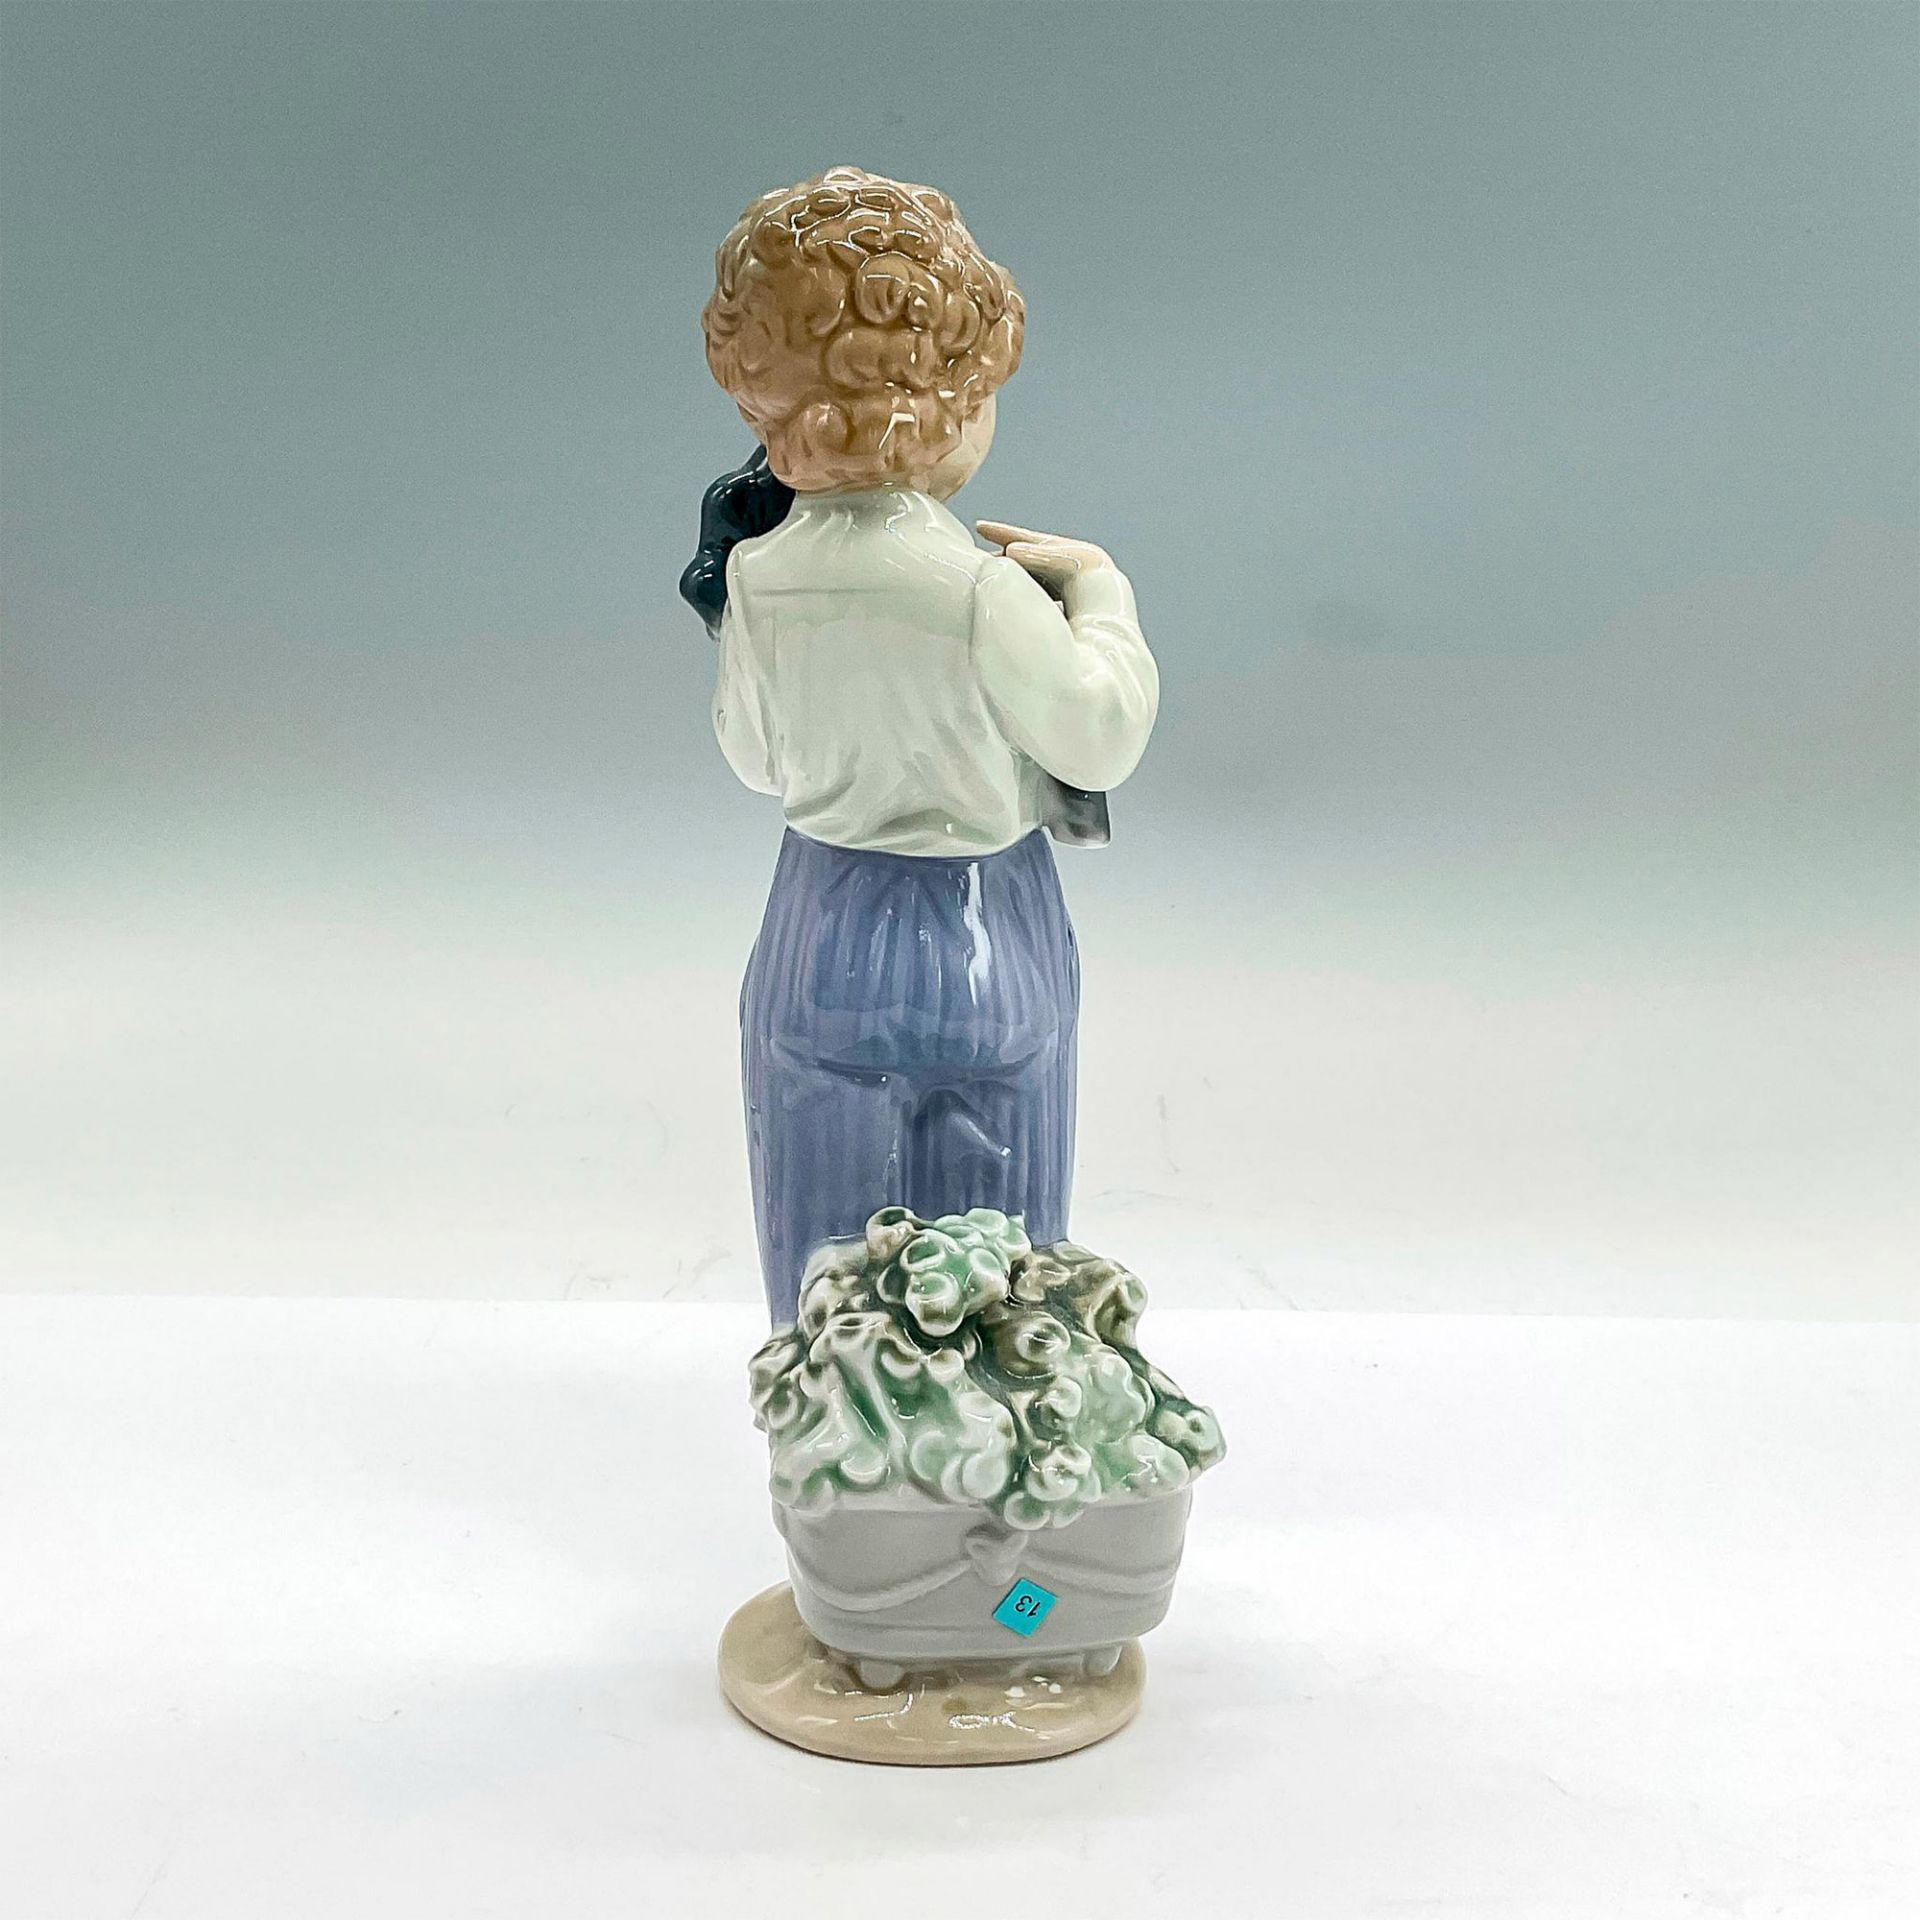 My Buddy 1007609 - Lladro Porcelain Figurine - Image 2 of 3